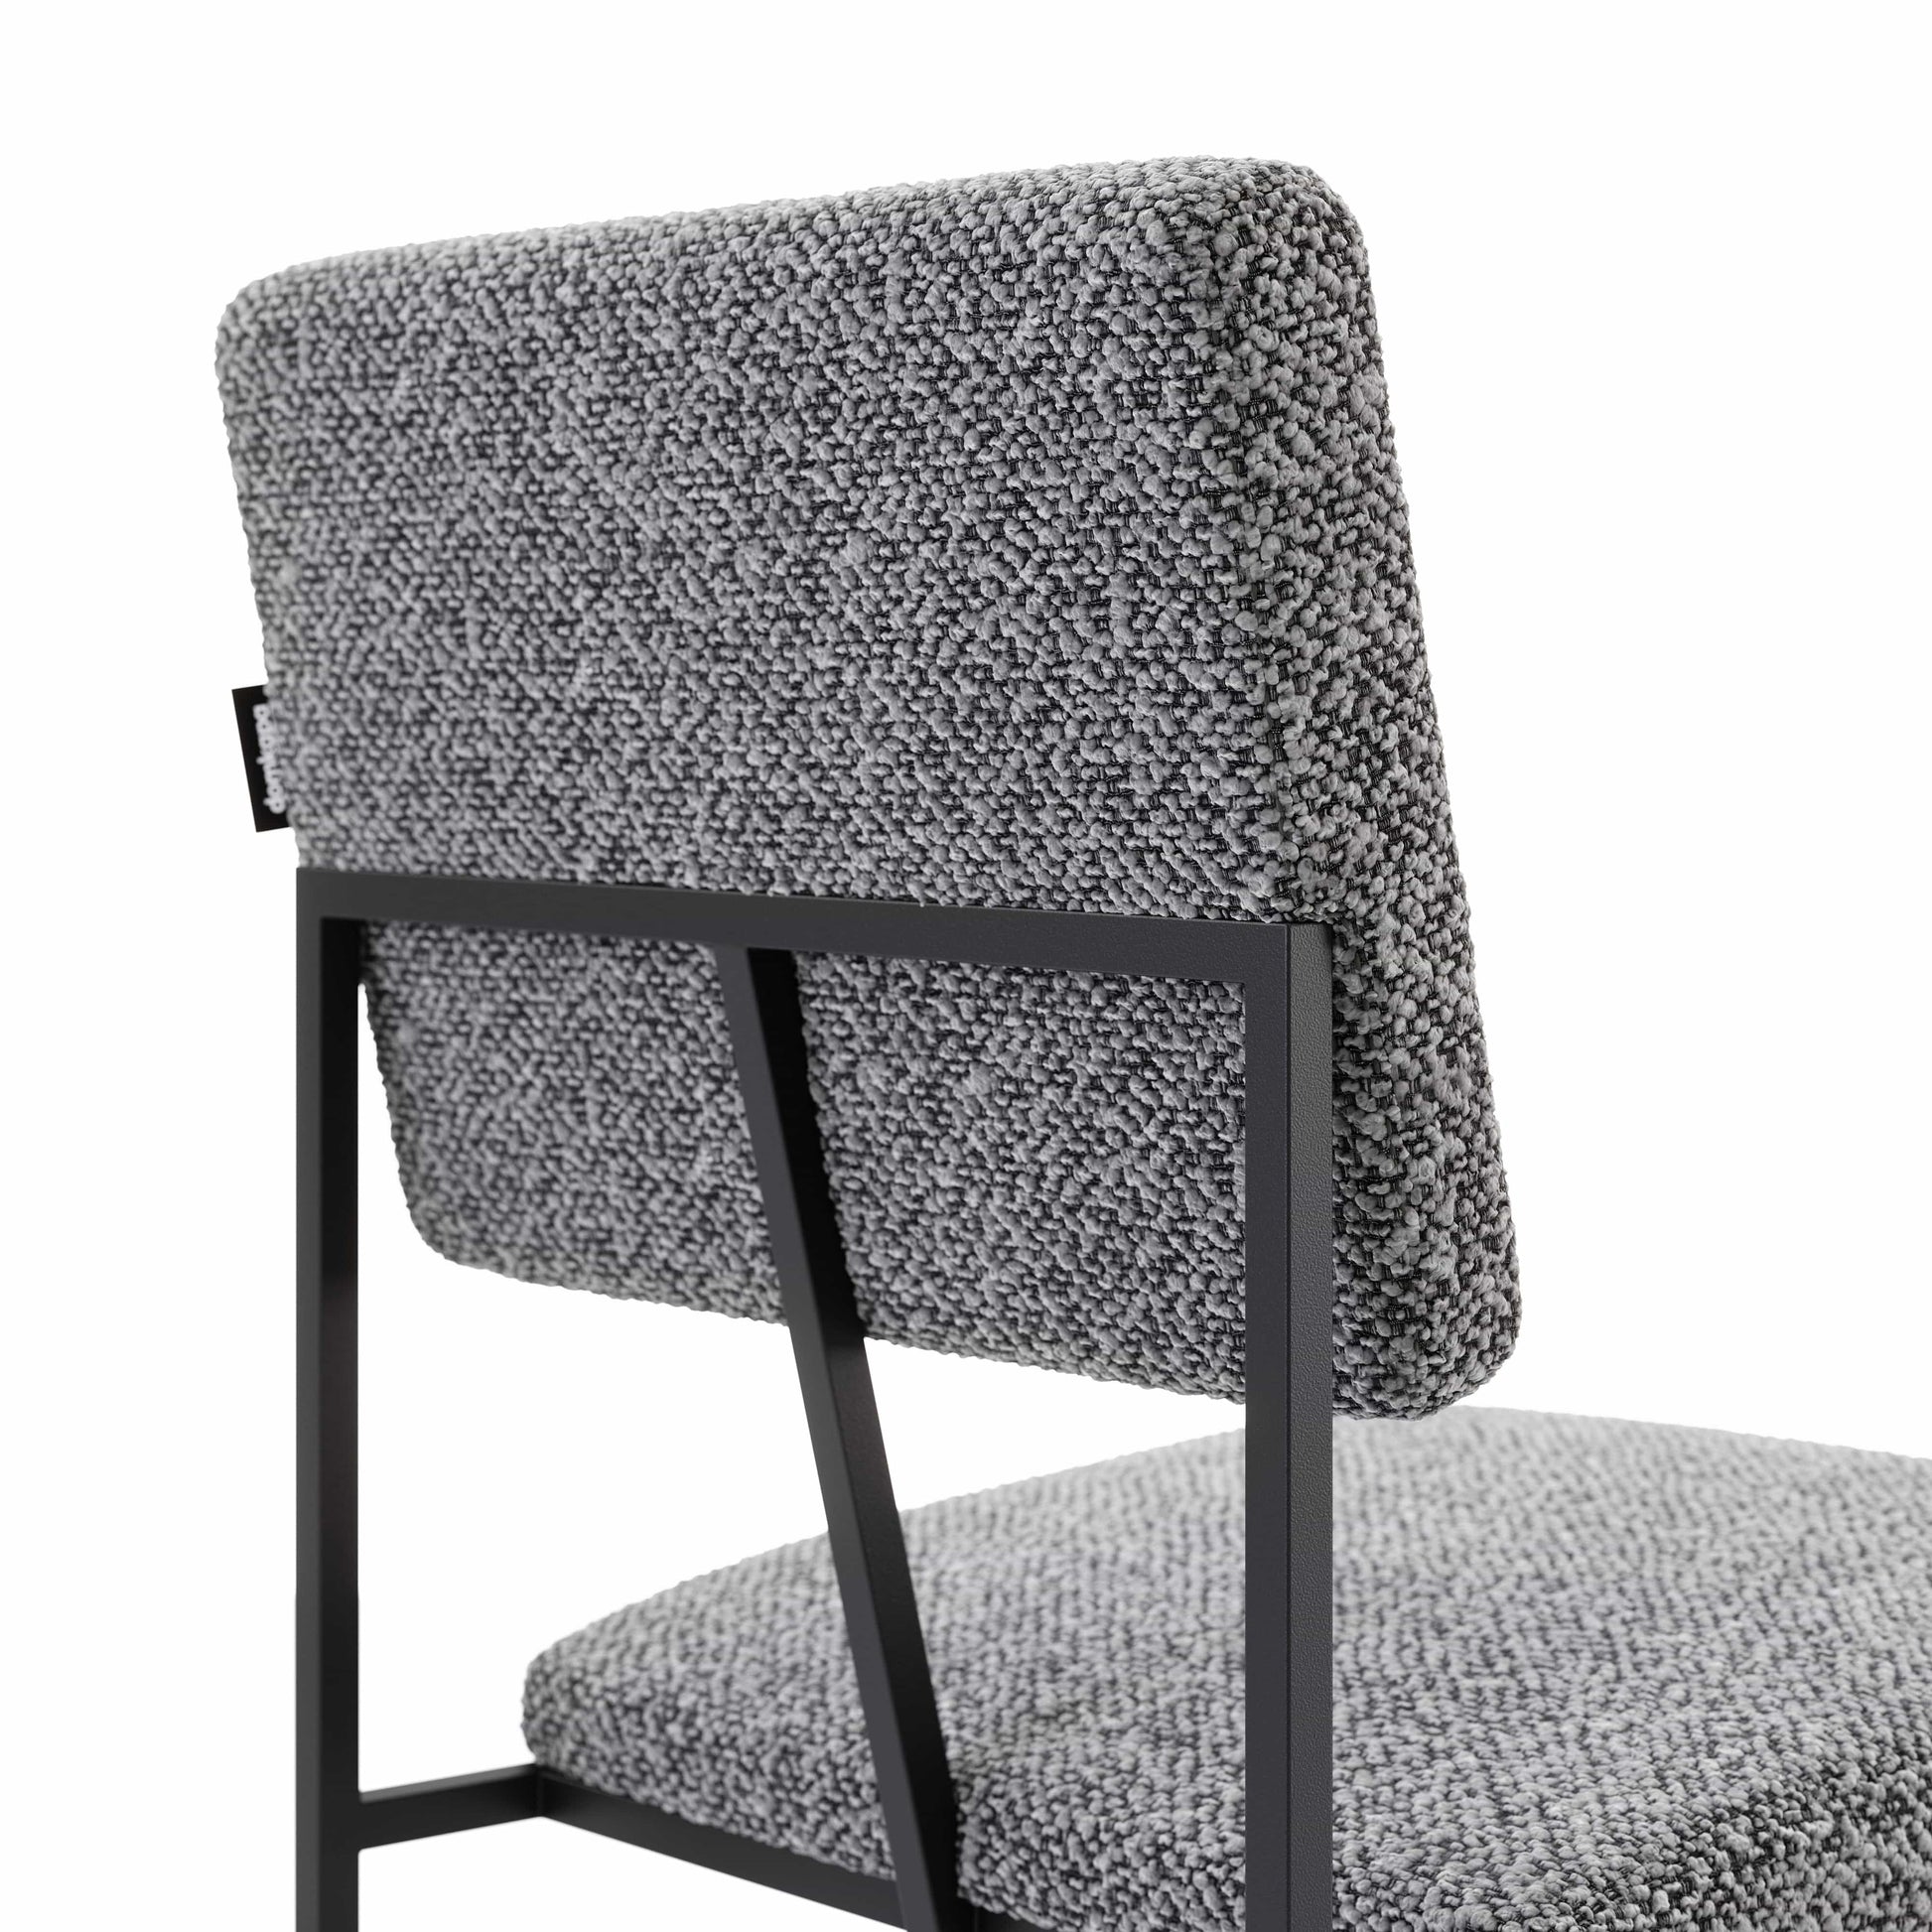 Domkapa Gram Chair by Domkapa- Boucle (Martindale: 80,000)